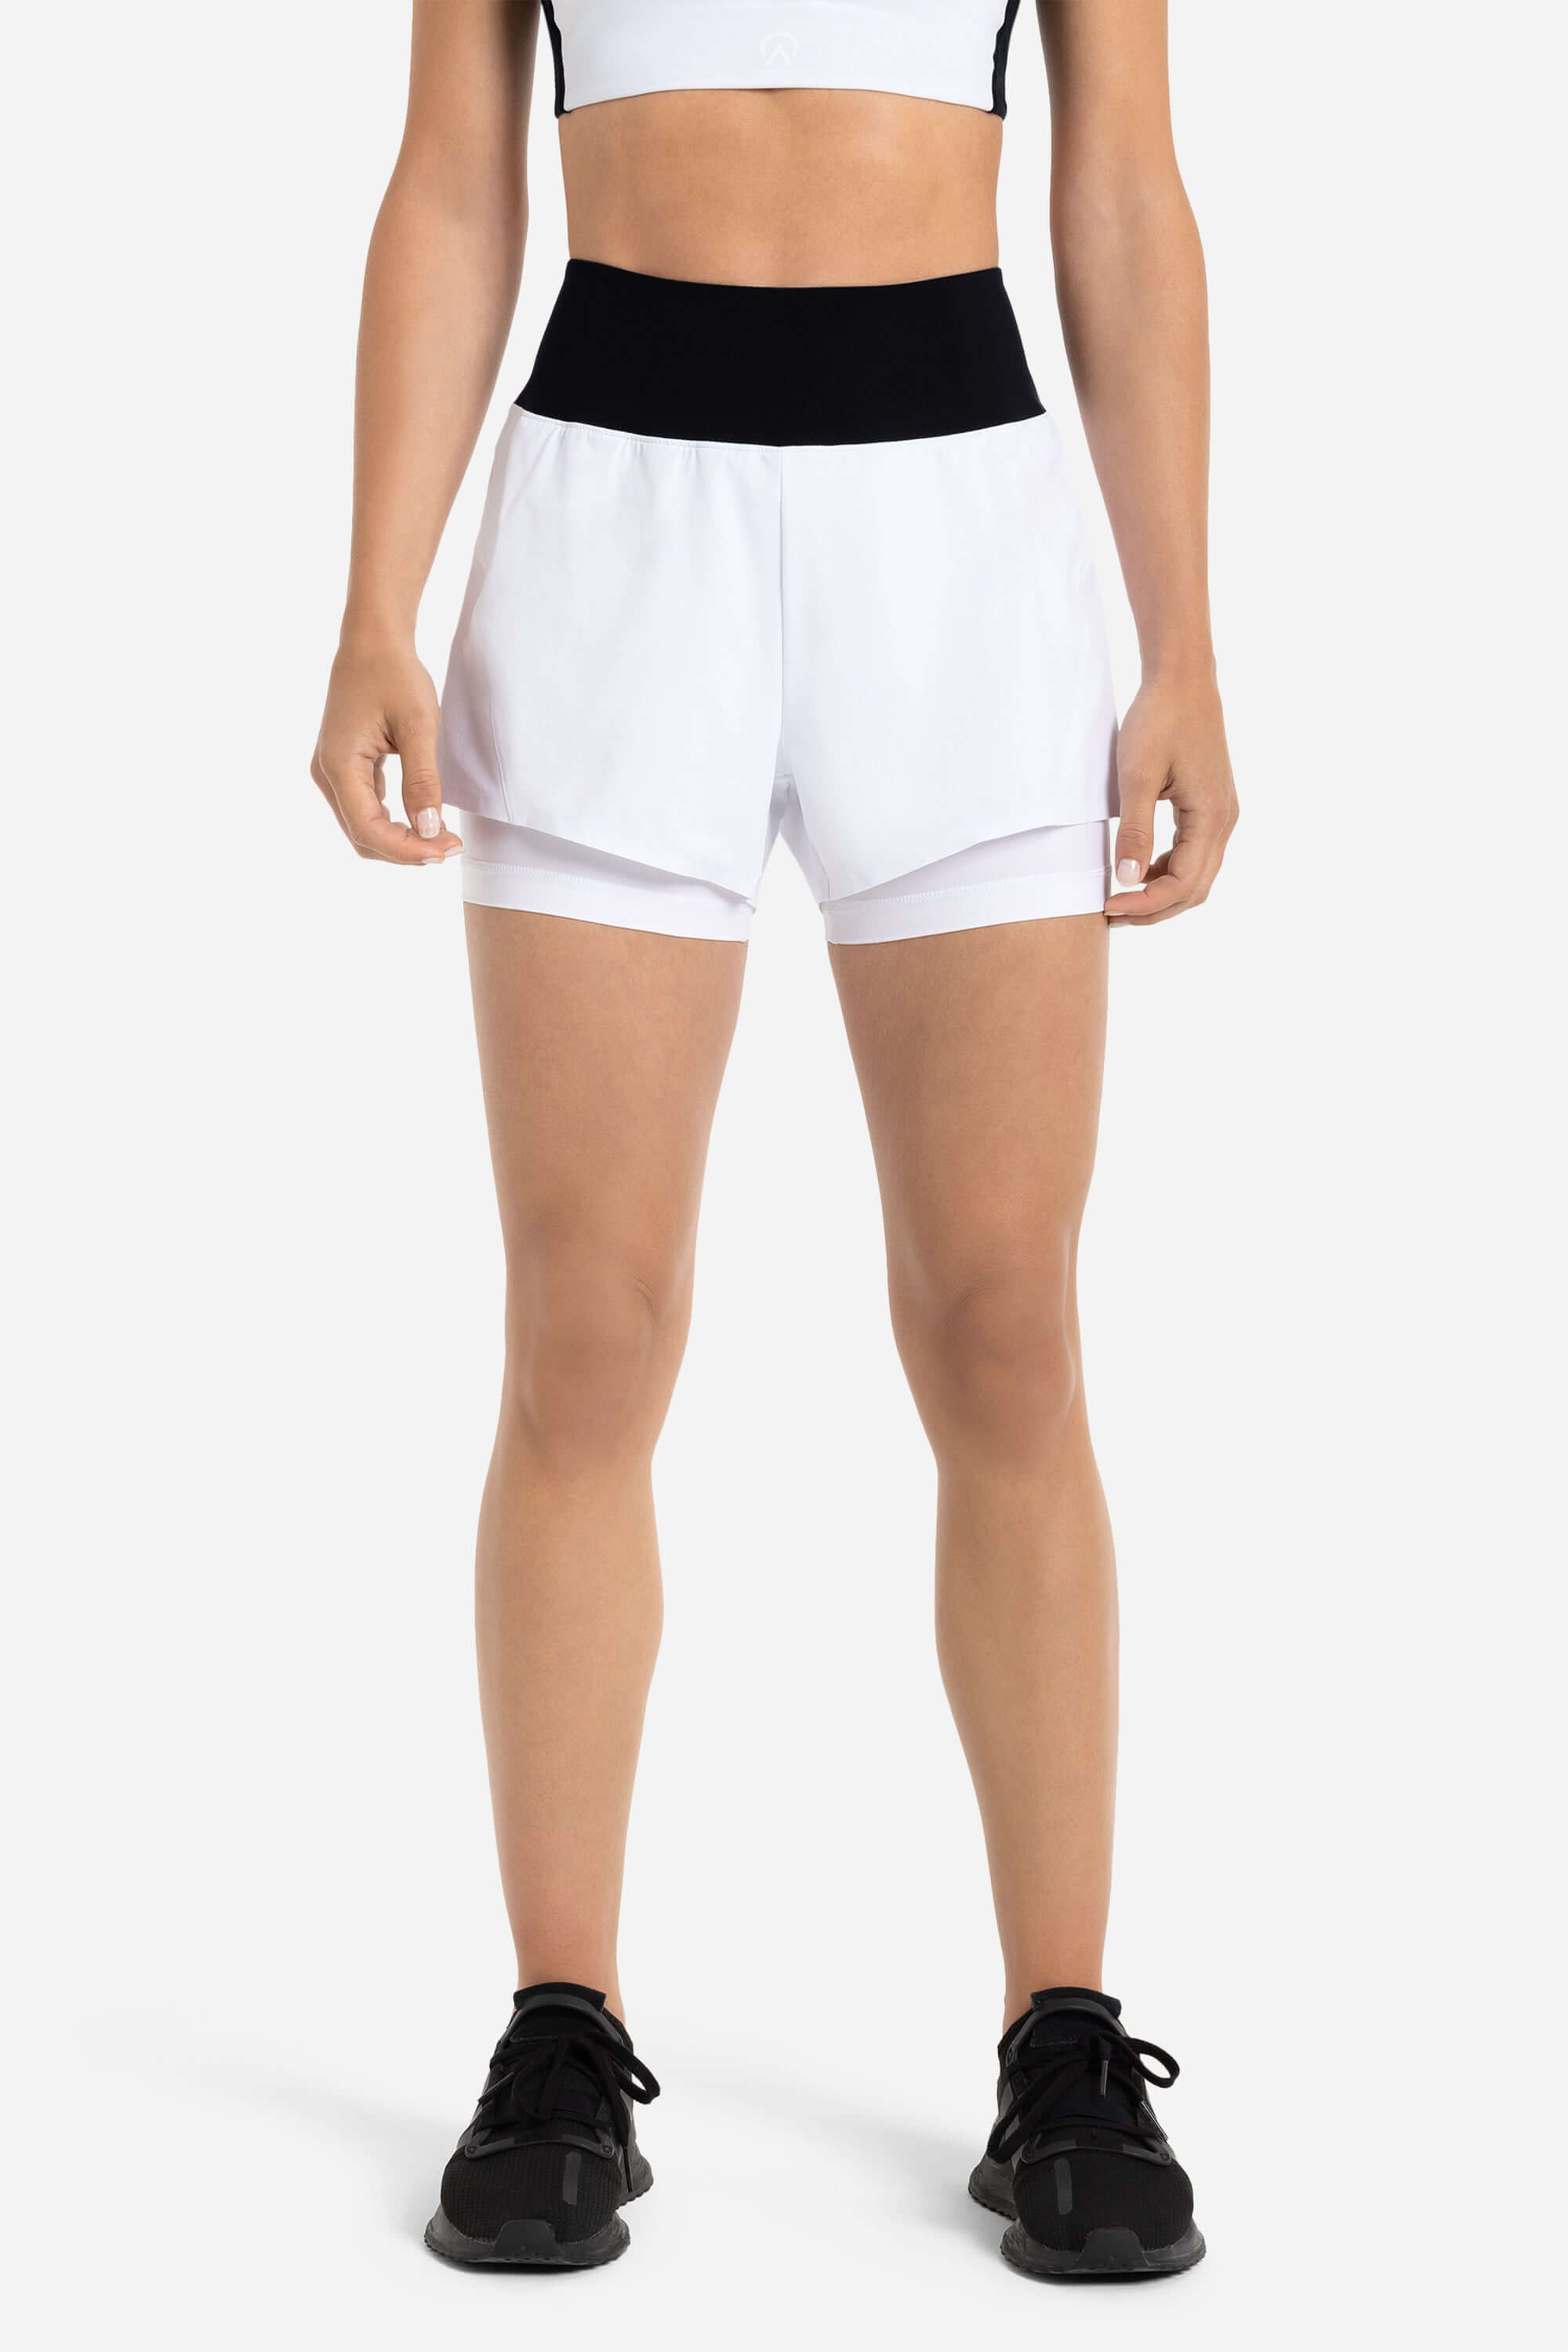 Women white short with black waistband from AYCANE